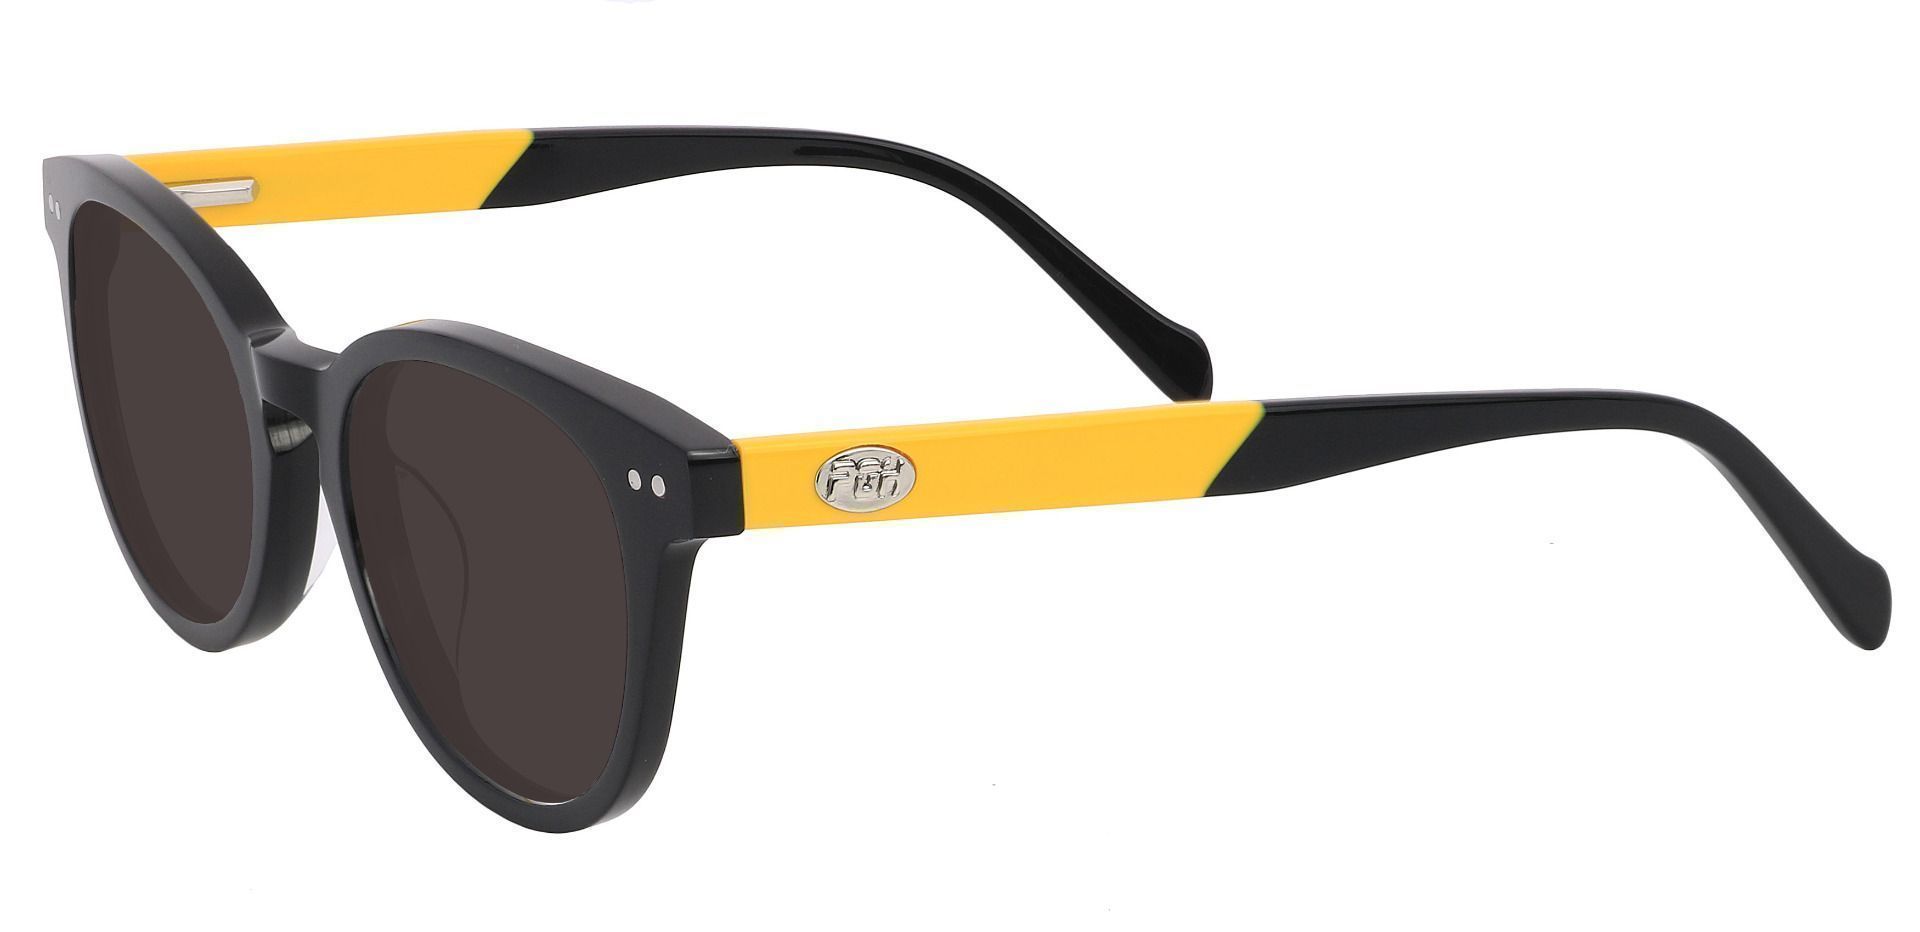 Forbes Oval Progressive Sunglasses - Black Frame With Gray Lenses